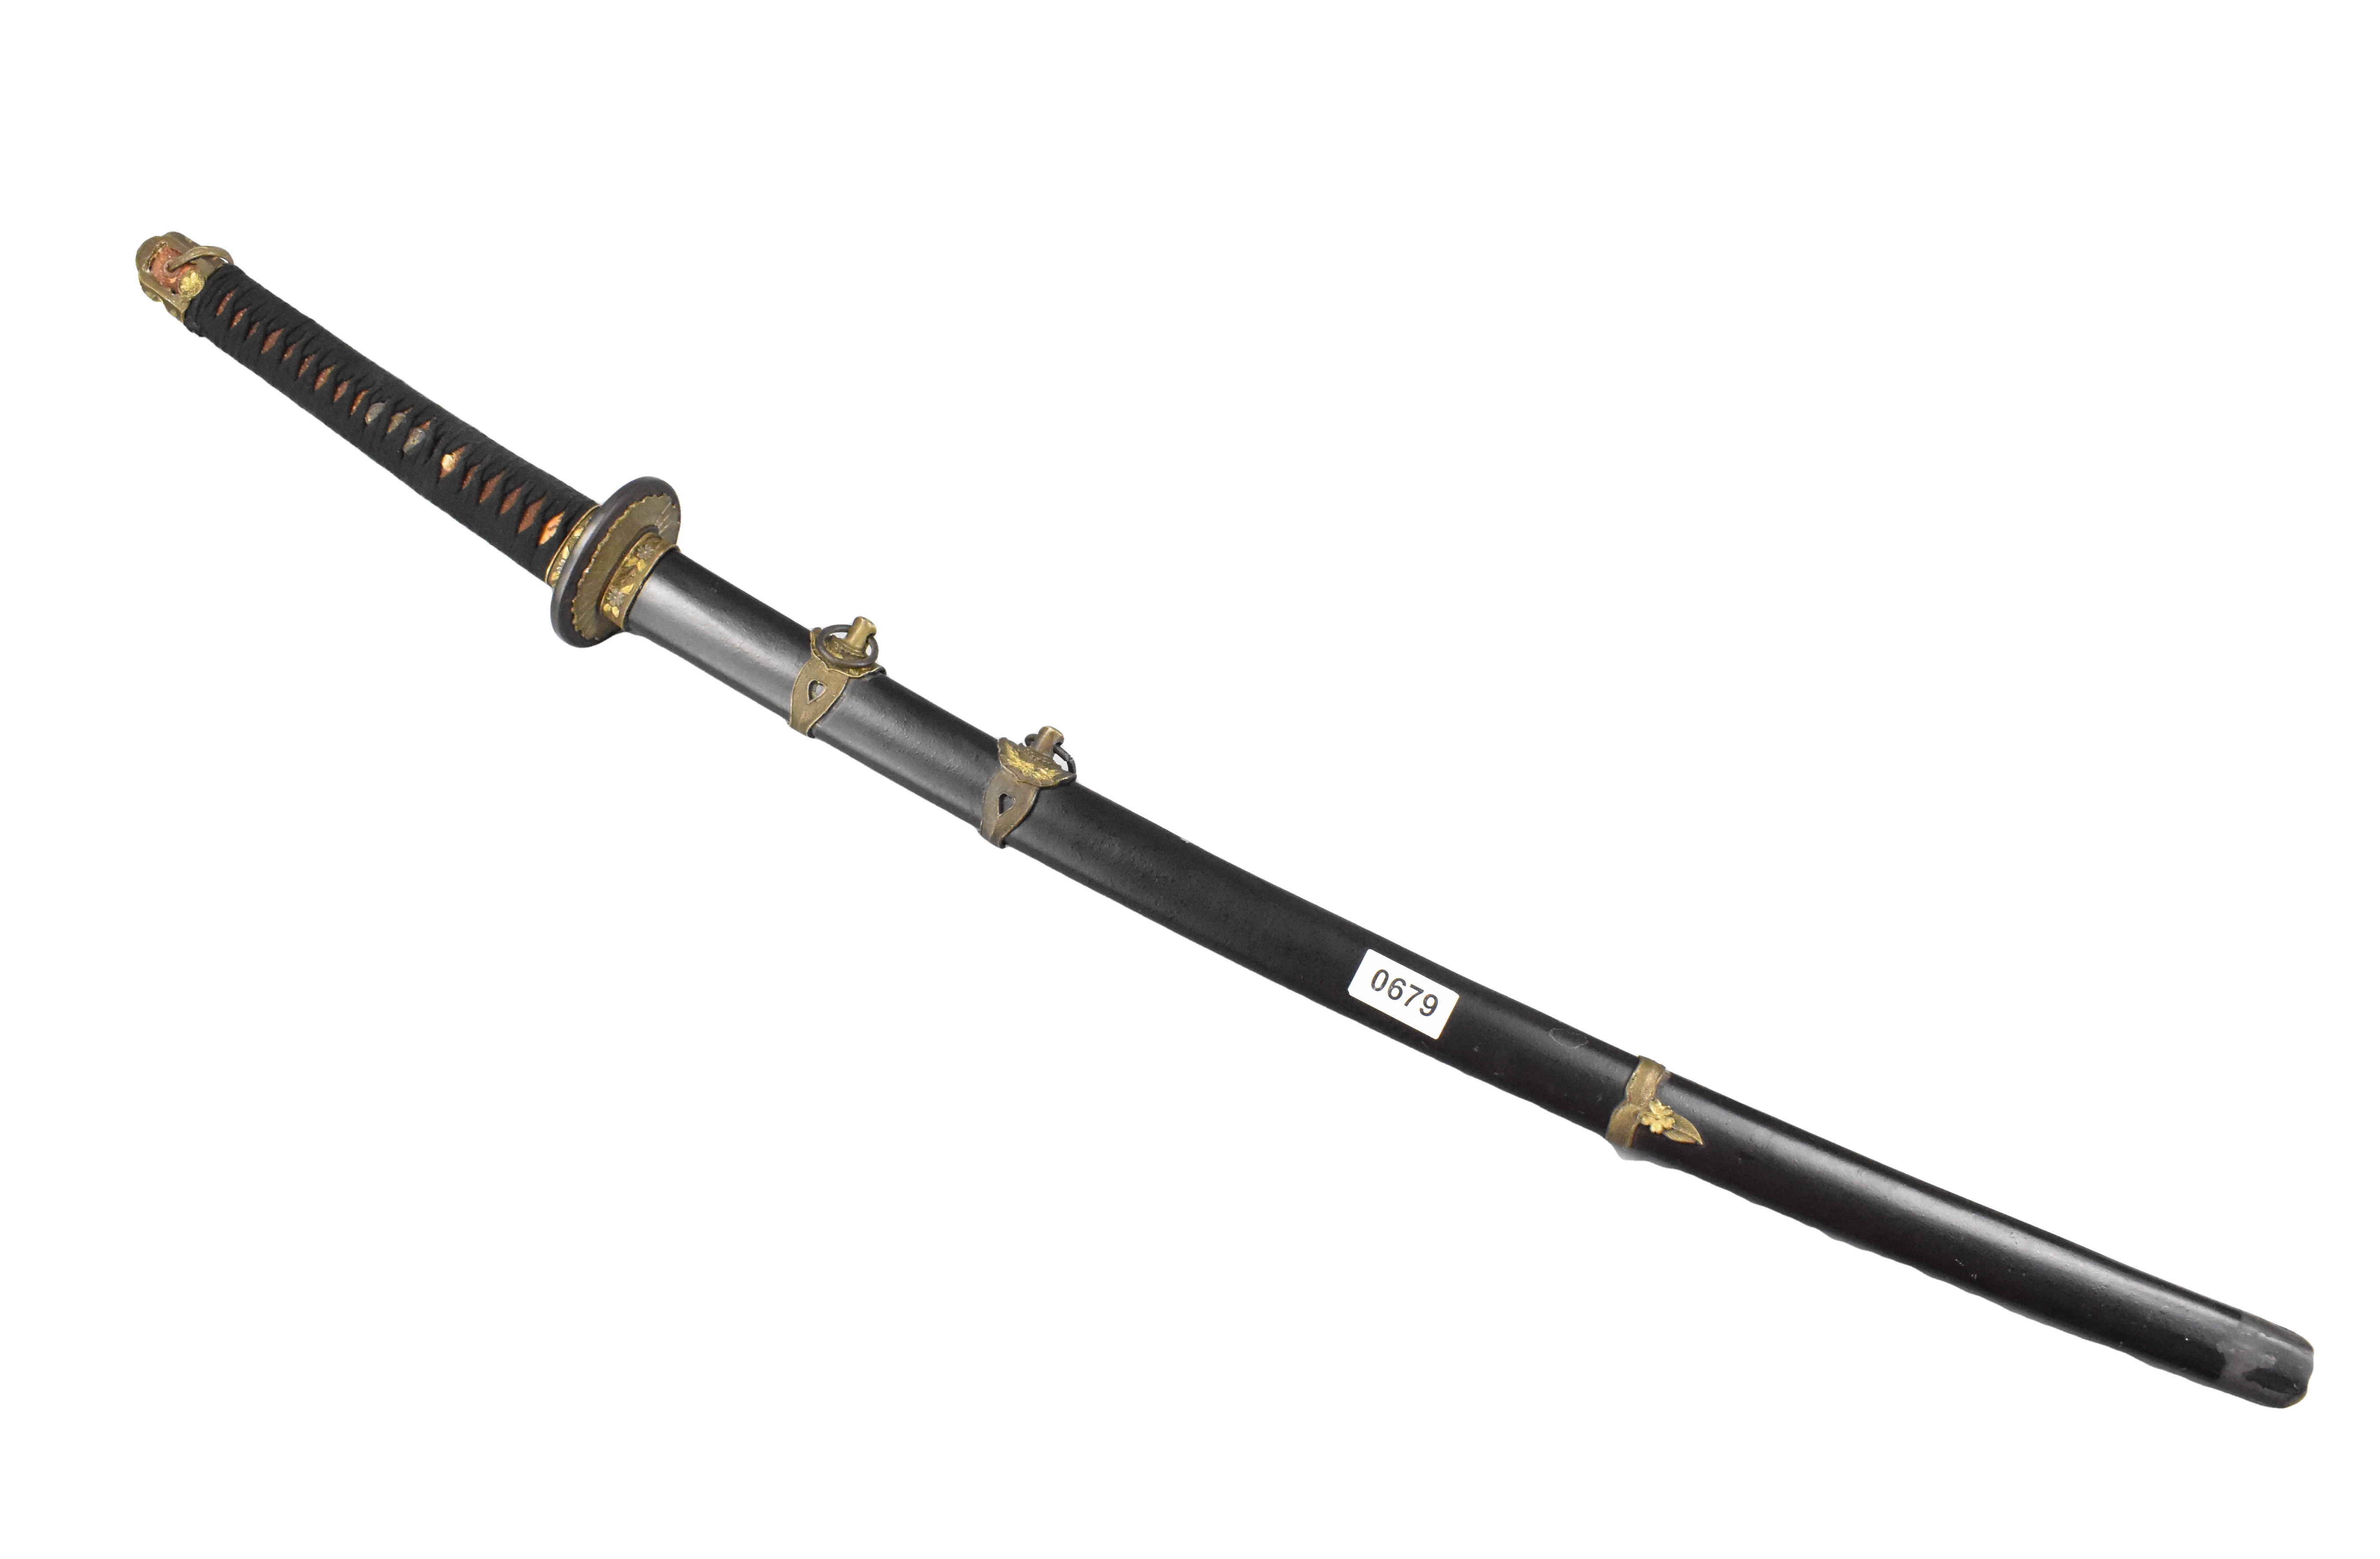 JAPANESE SAMURAI SWORD A Japanese 33a010